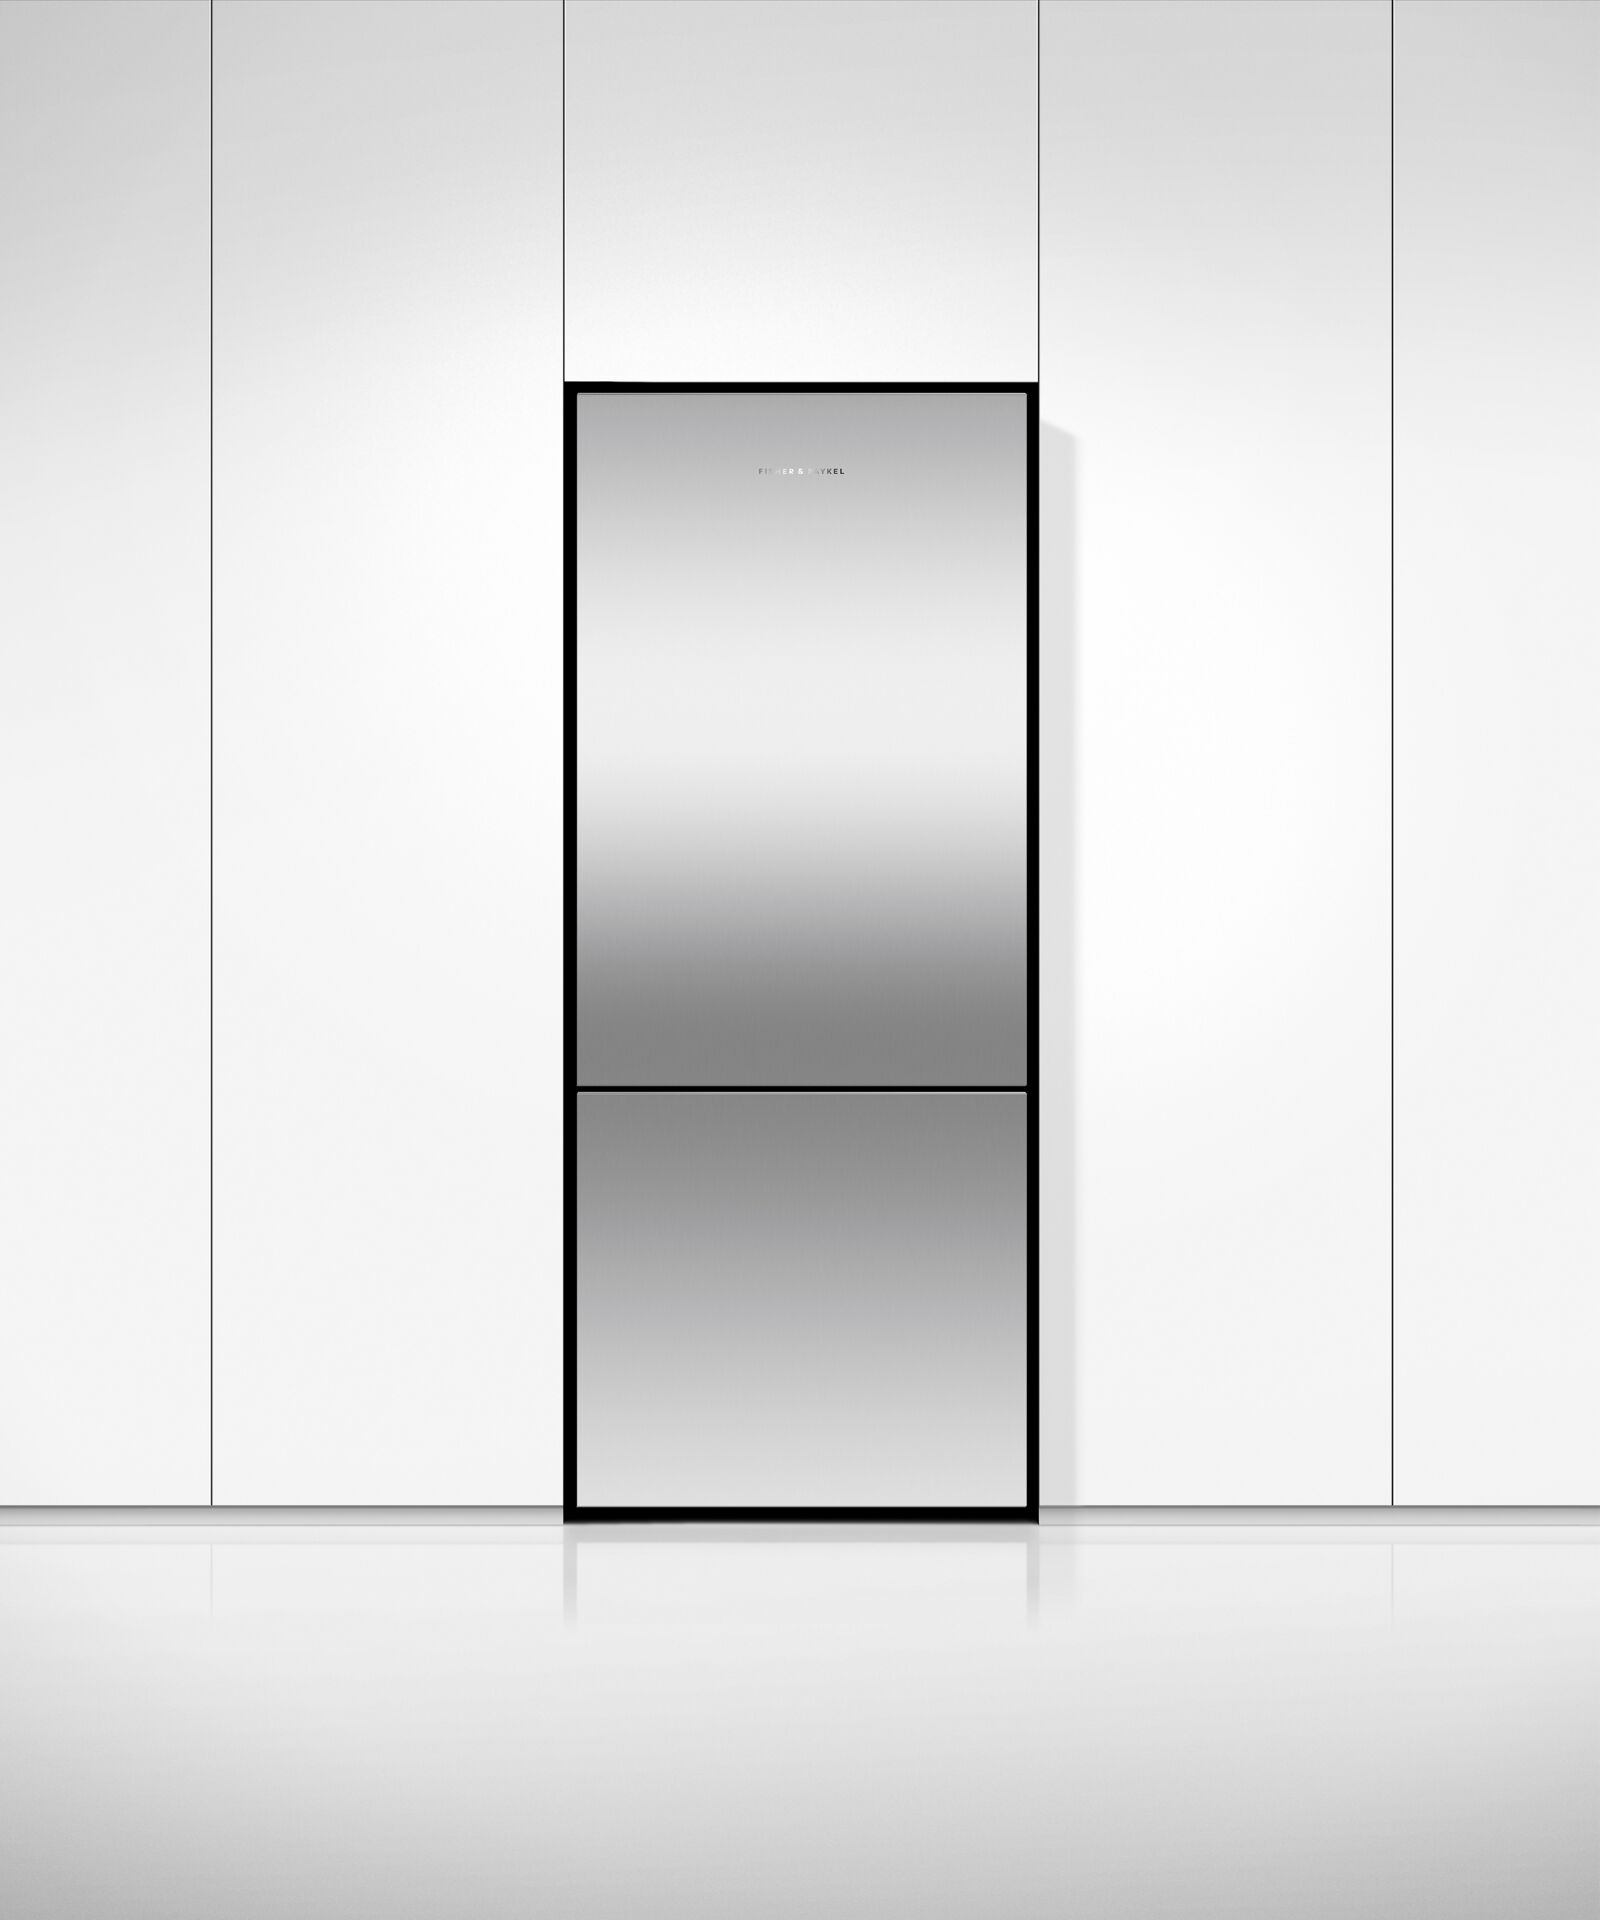 獨立式雪櫃冷凍櫃, 68cm, gallery image 3.0